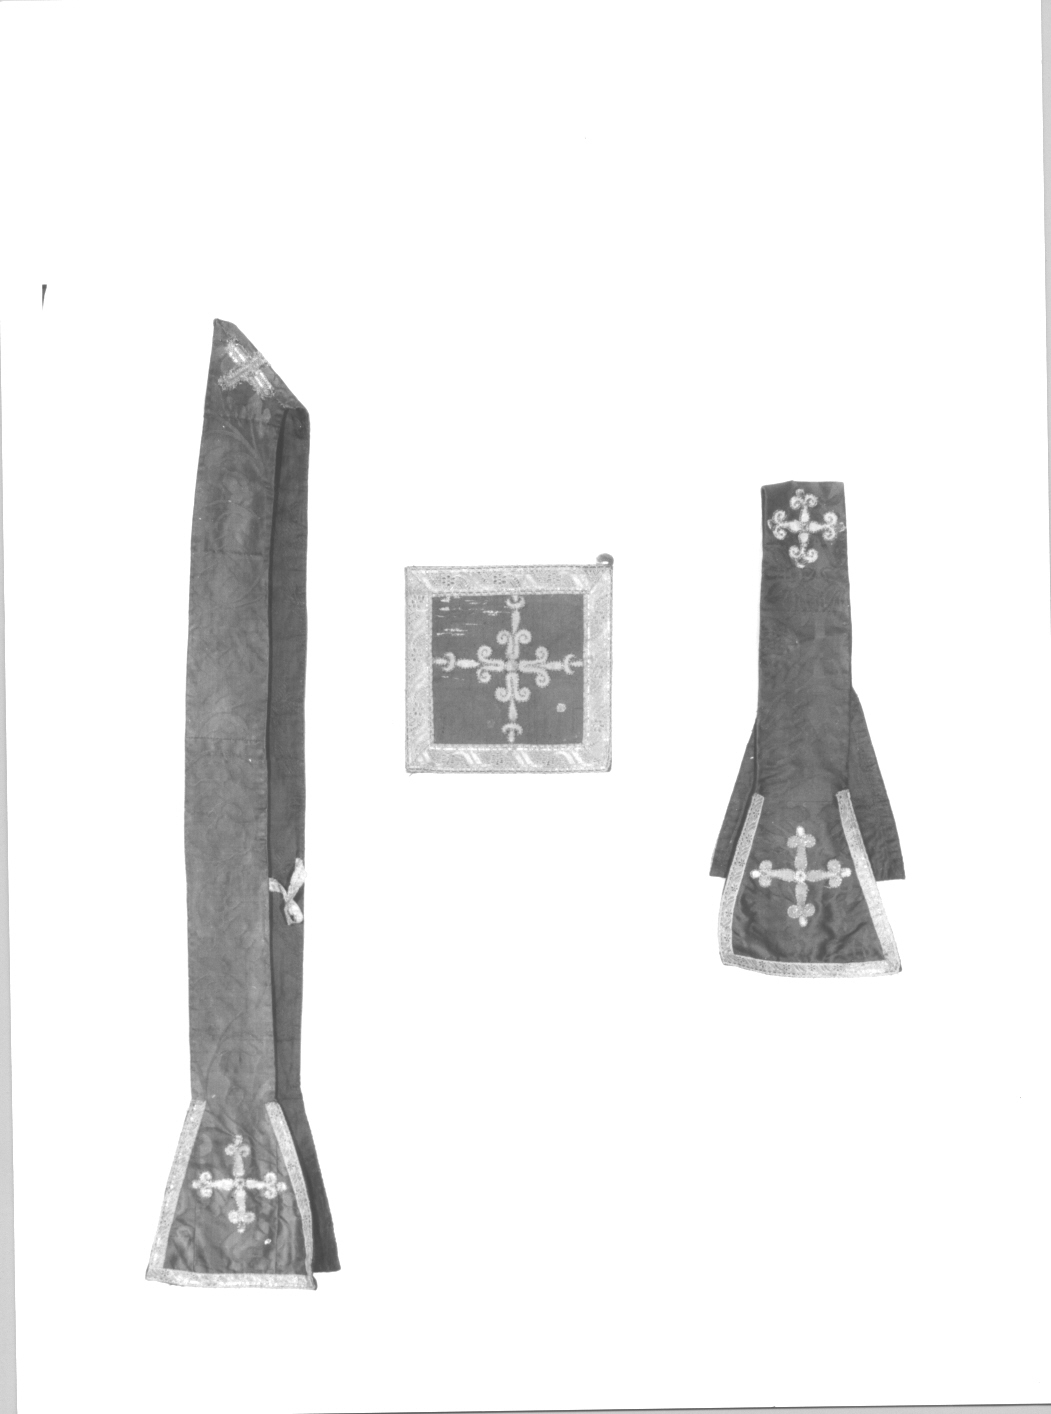 motivi decorativi vegetali stilizzati (paramento liturgico, insieme) - manifattura italiana (sec. XIX)